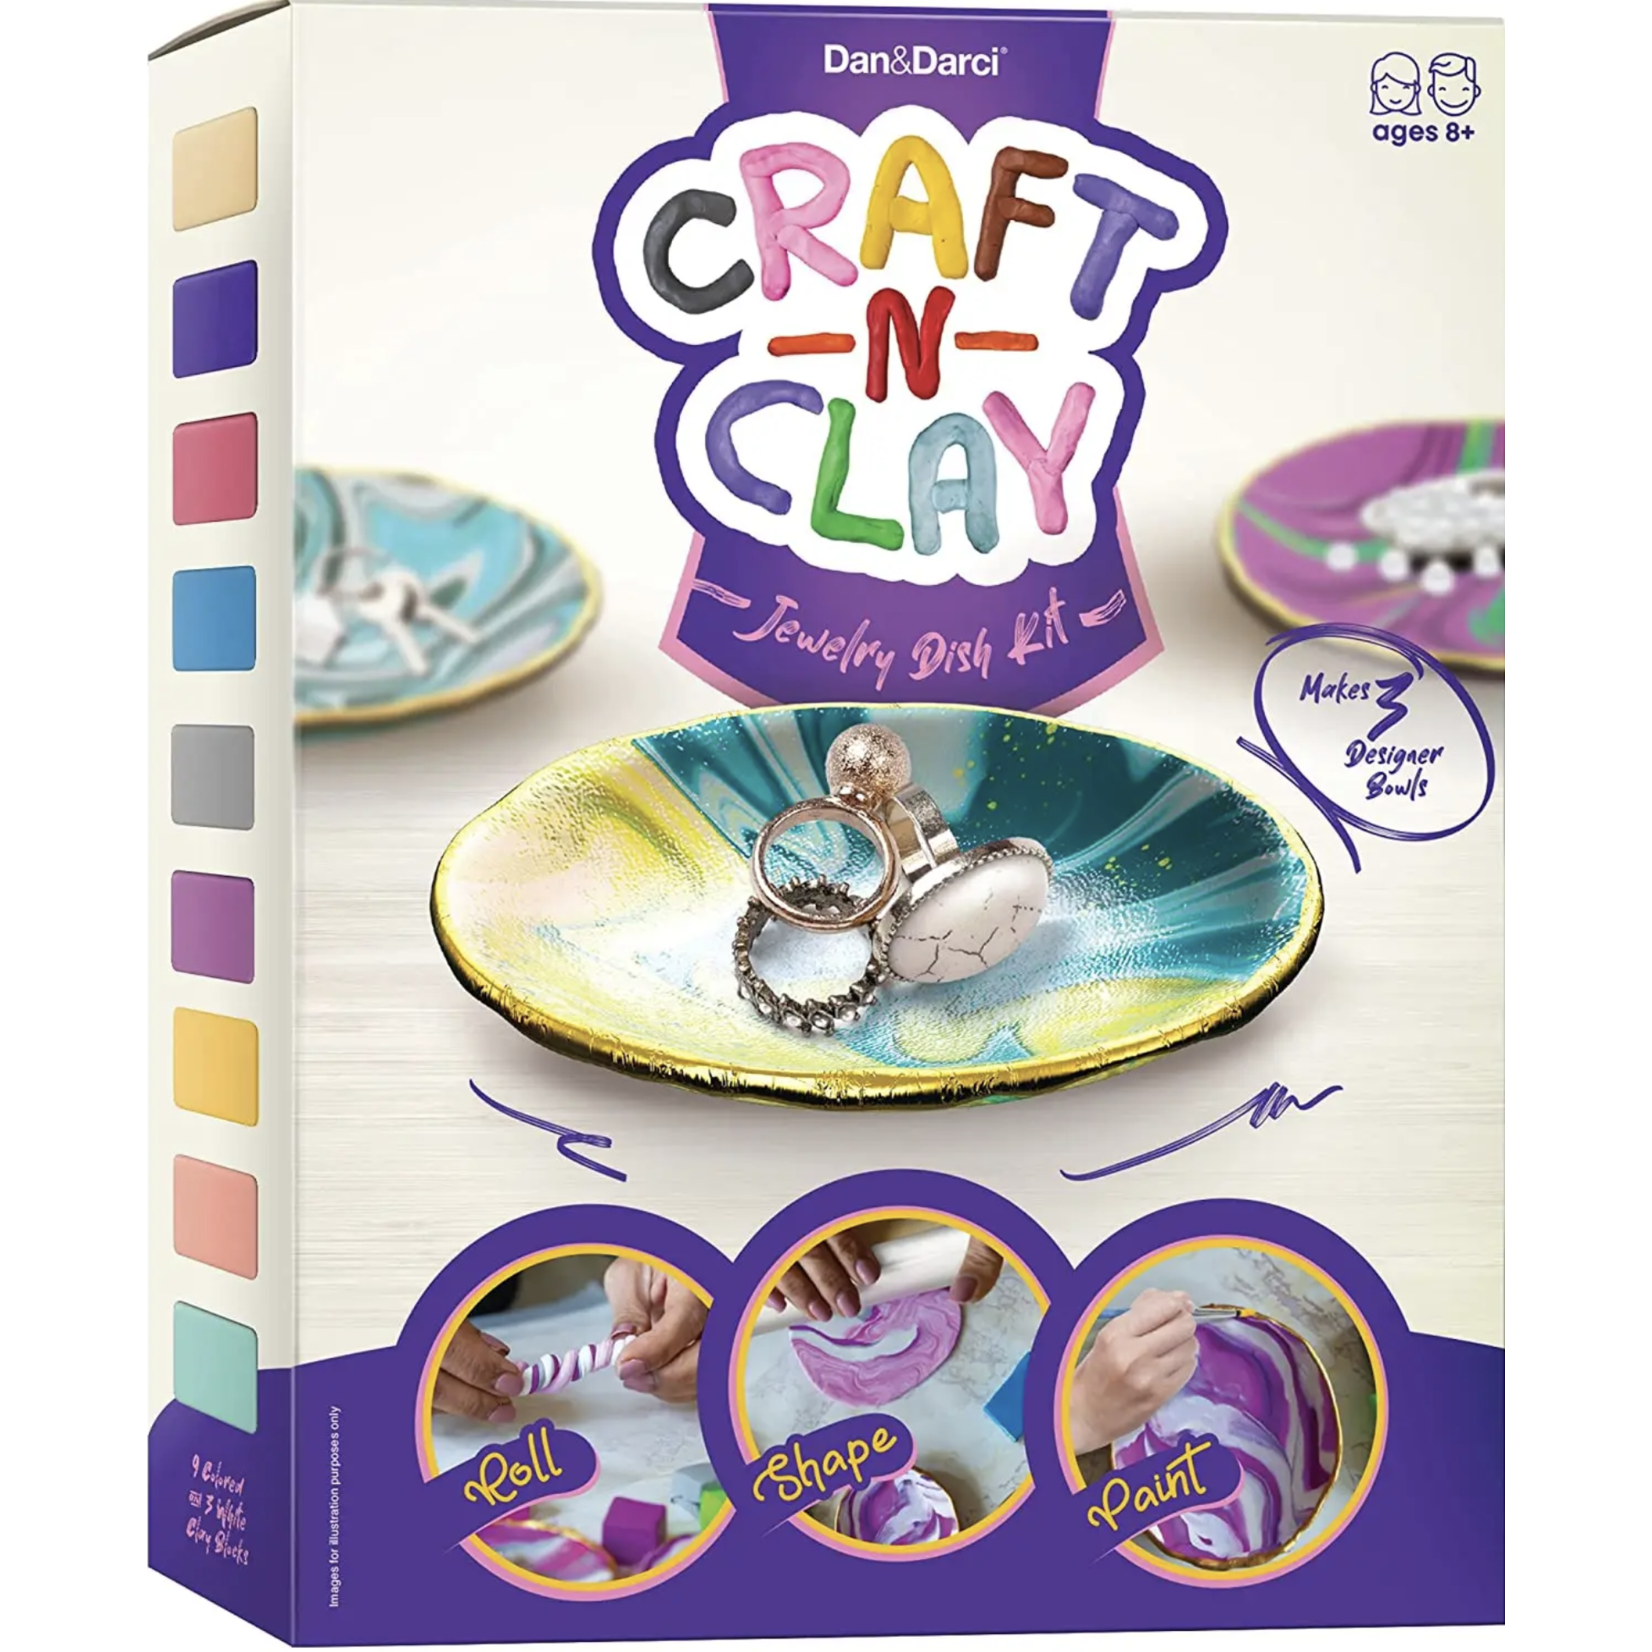 Dan&Darci Craft 'n Clay - Jewelry Dish Making Kit for Kids